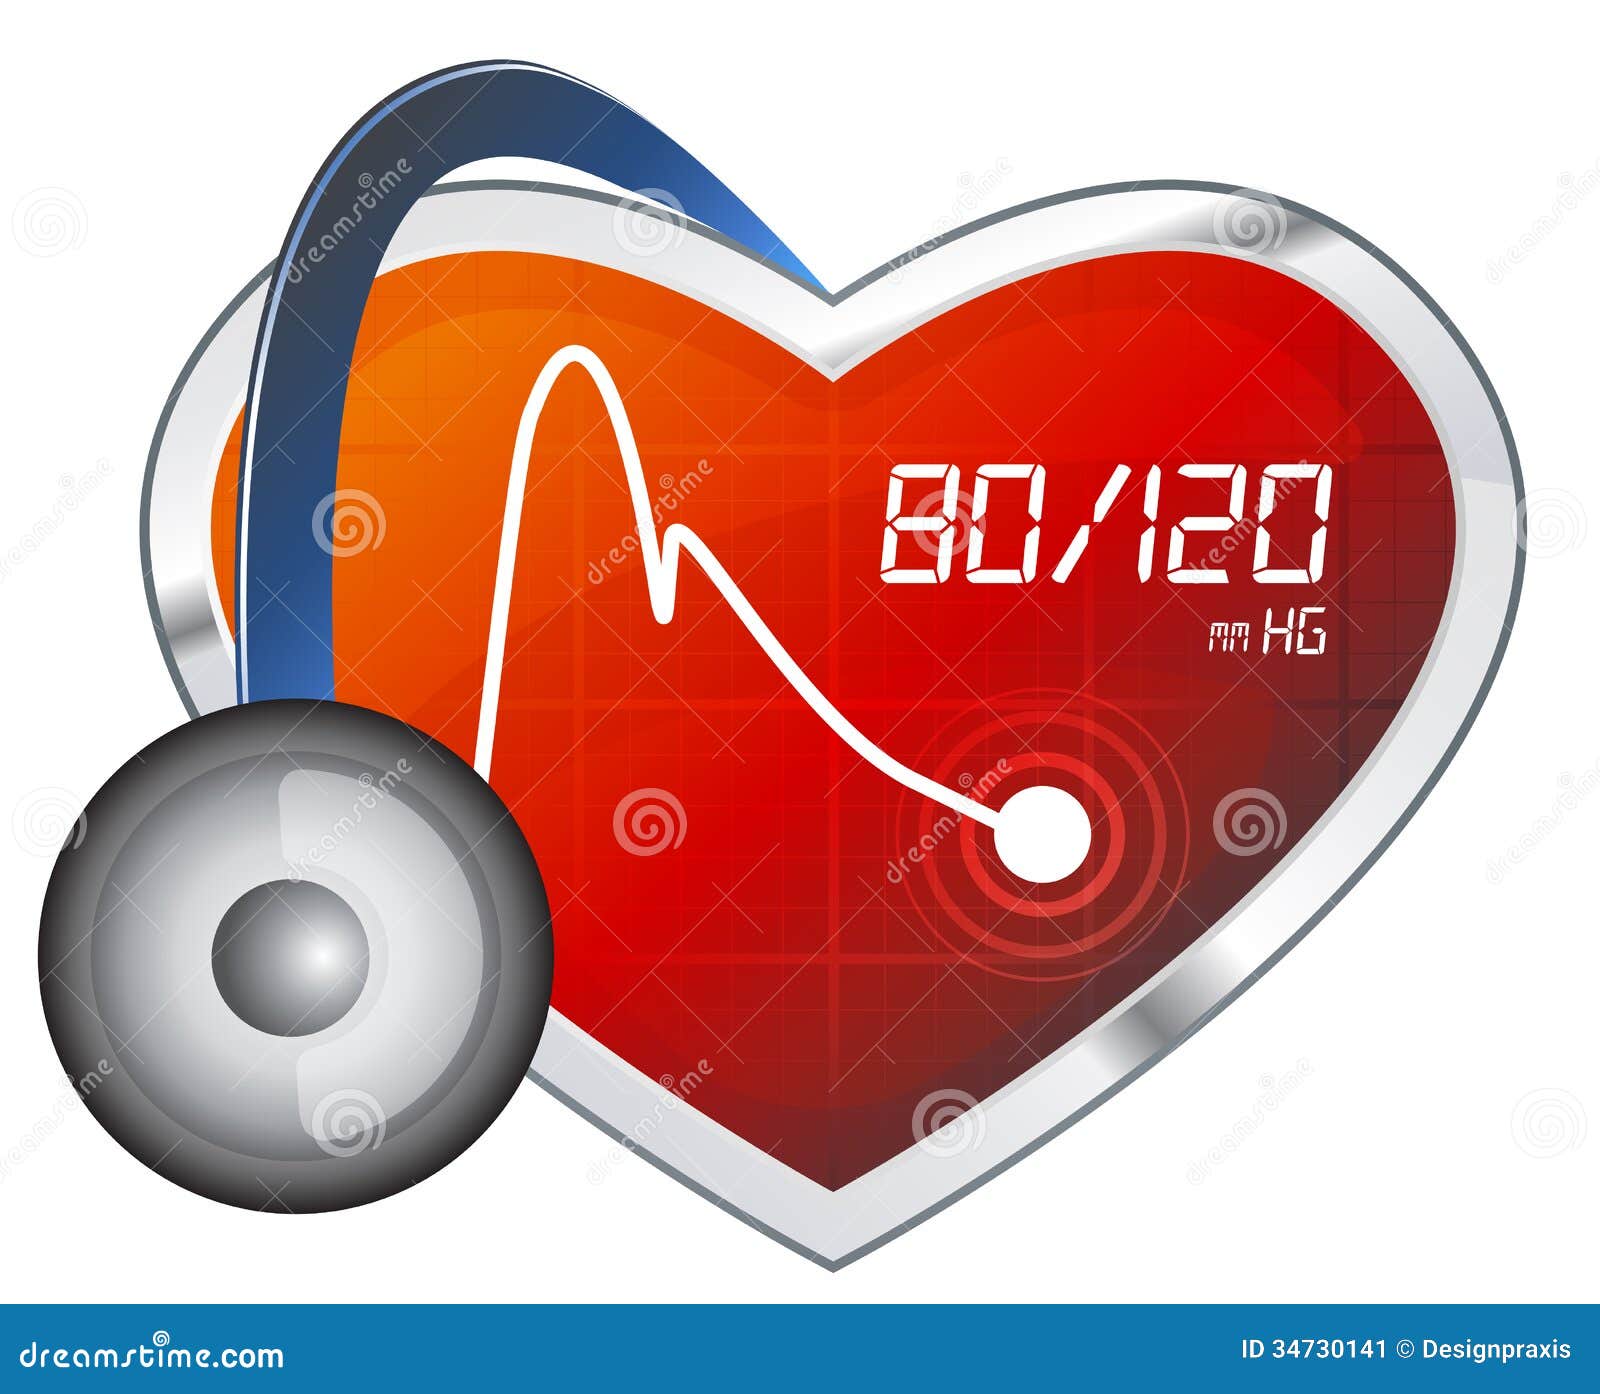 blood pressure chart clipart - photo #36